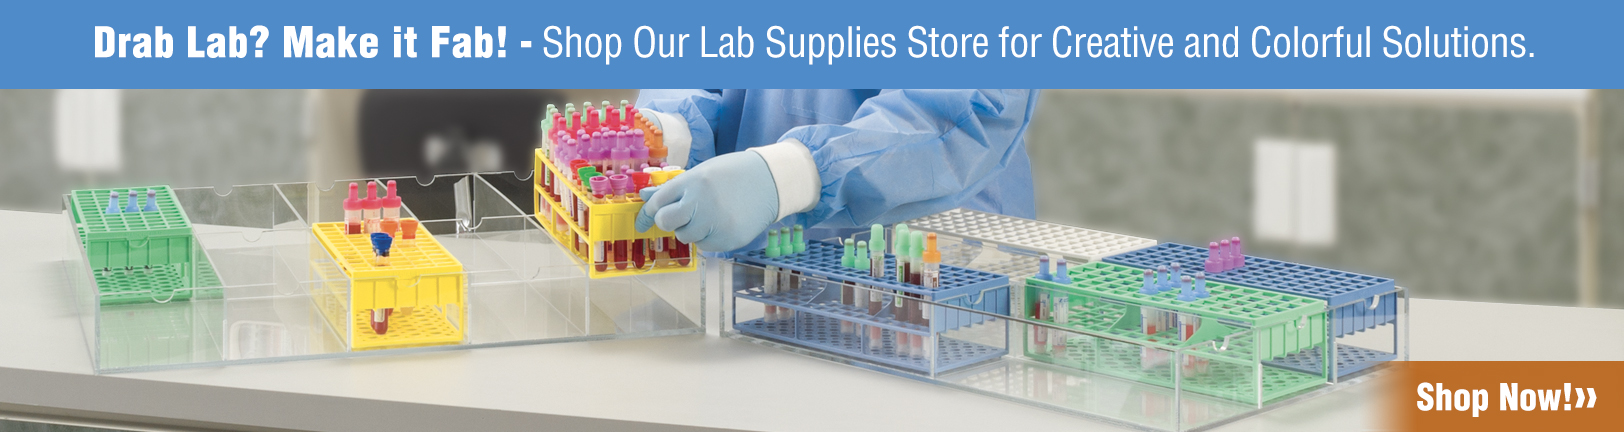 Shop Our Lab Supplies Store!